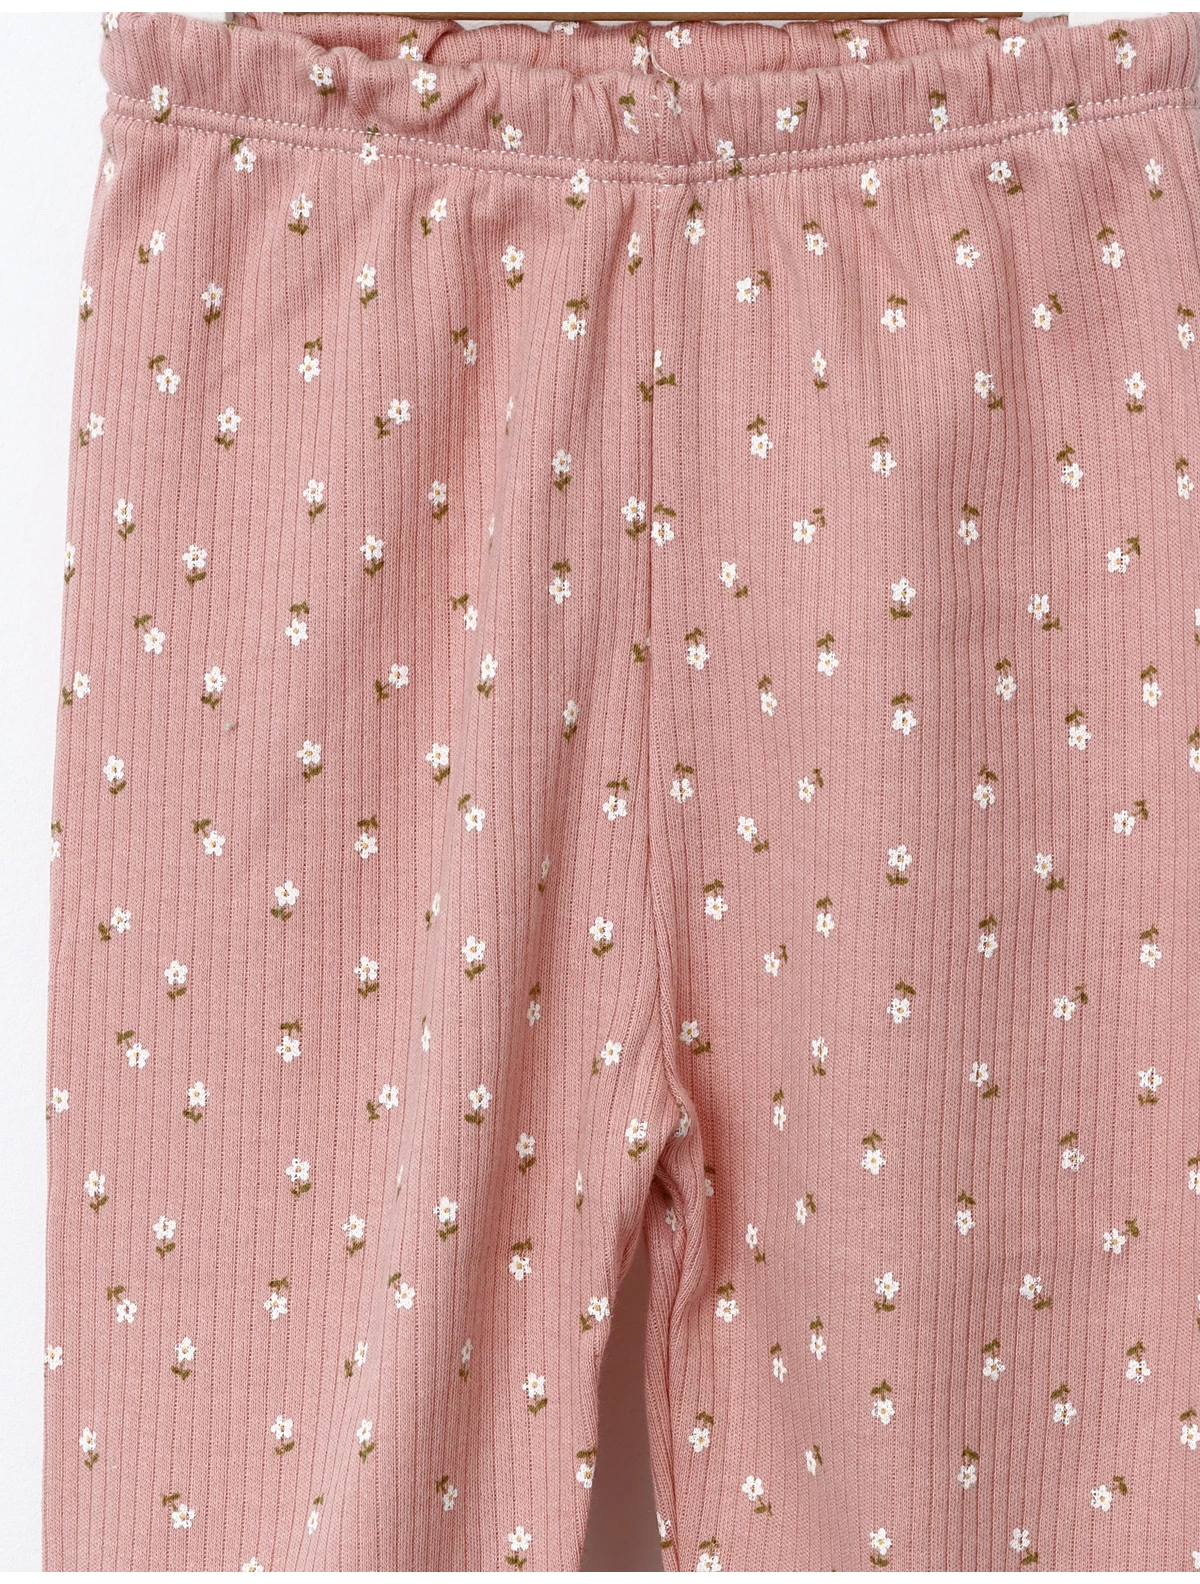 Pantaloni Flori de Musetel roz-prafuit